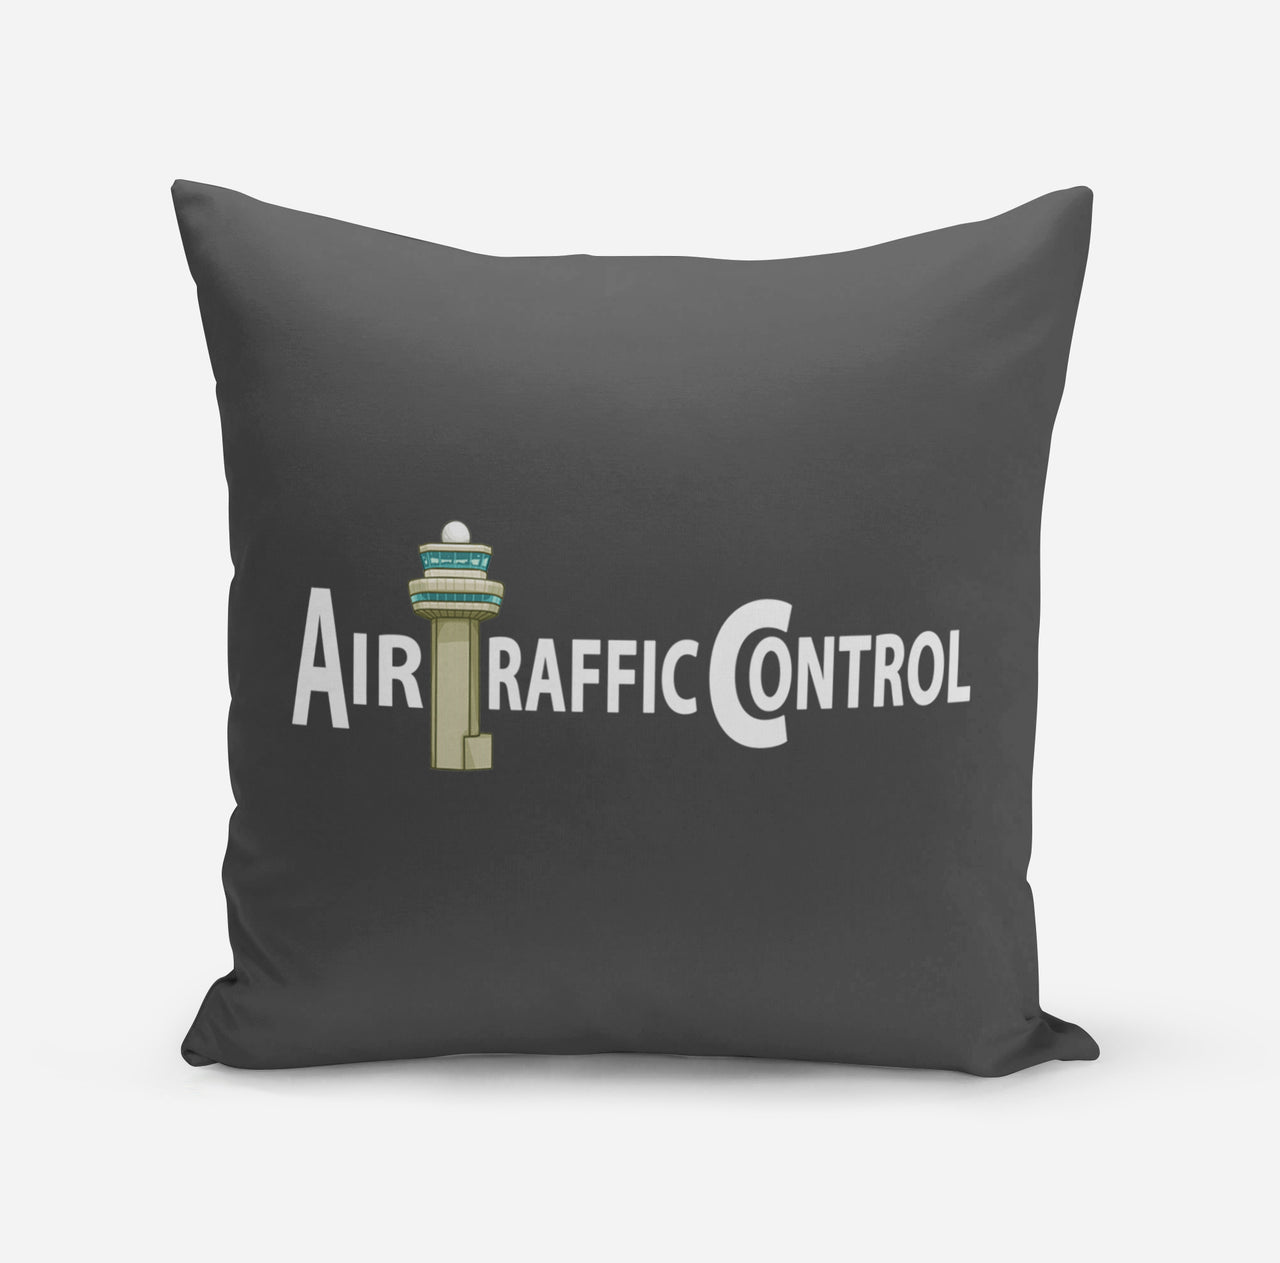 Air Traffic Control Designed Pillows